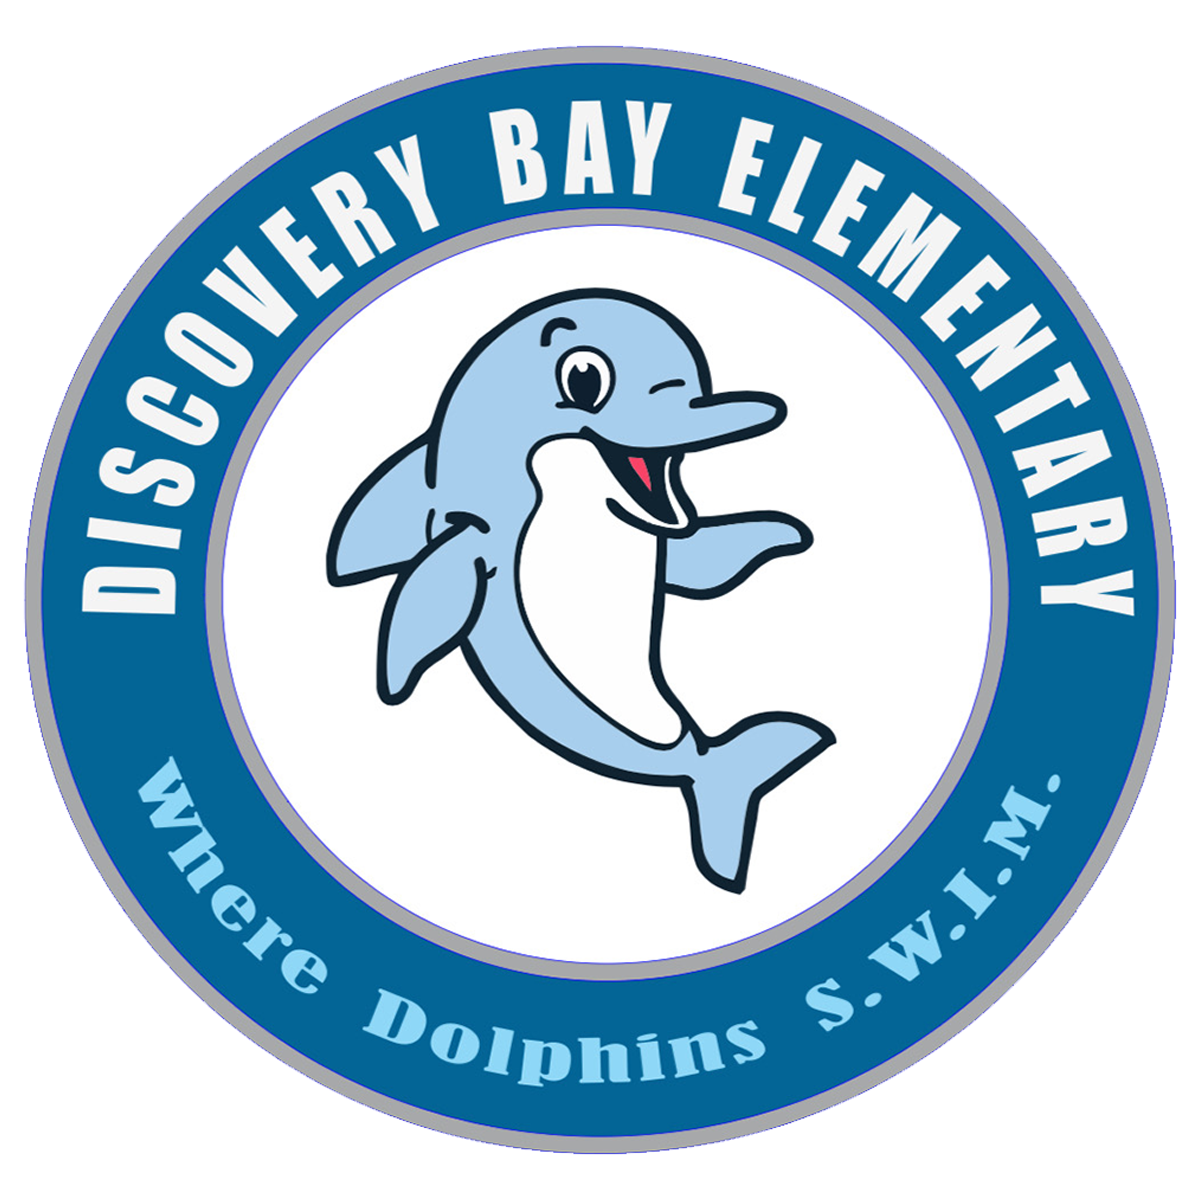 Discovery Bay Elementary Logo